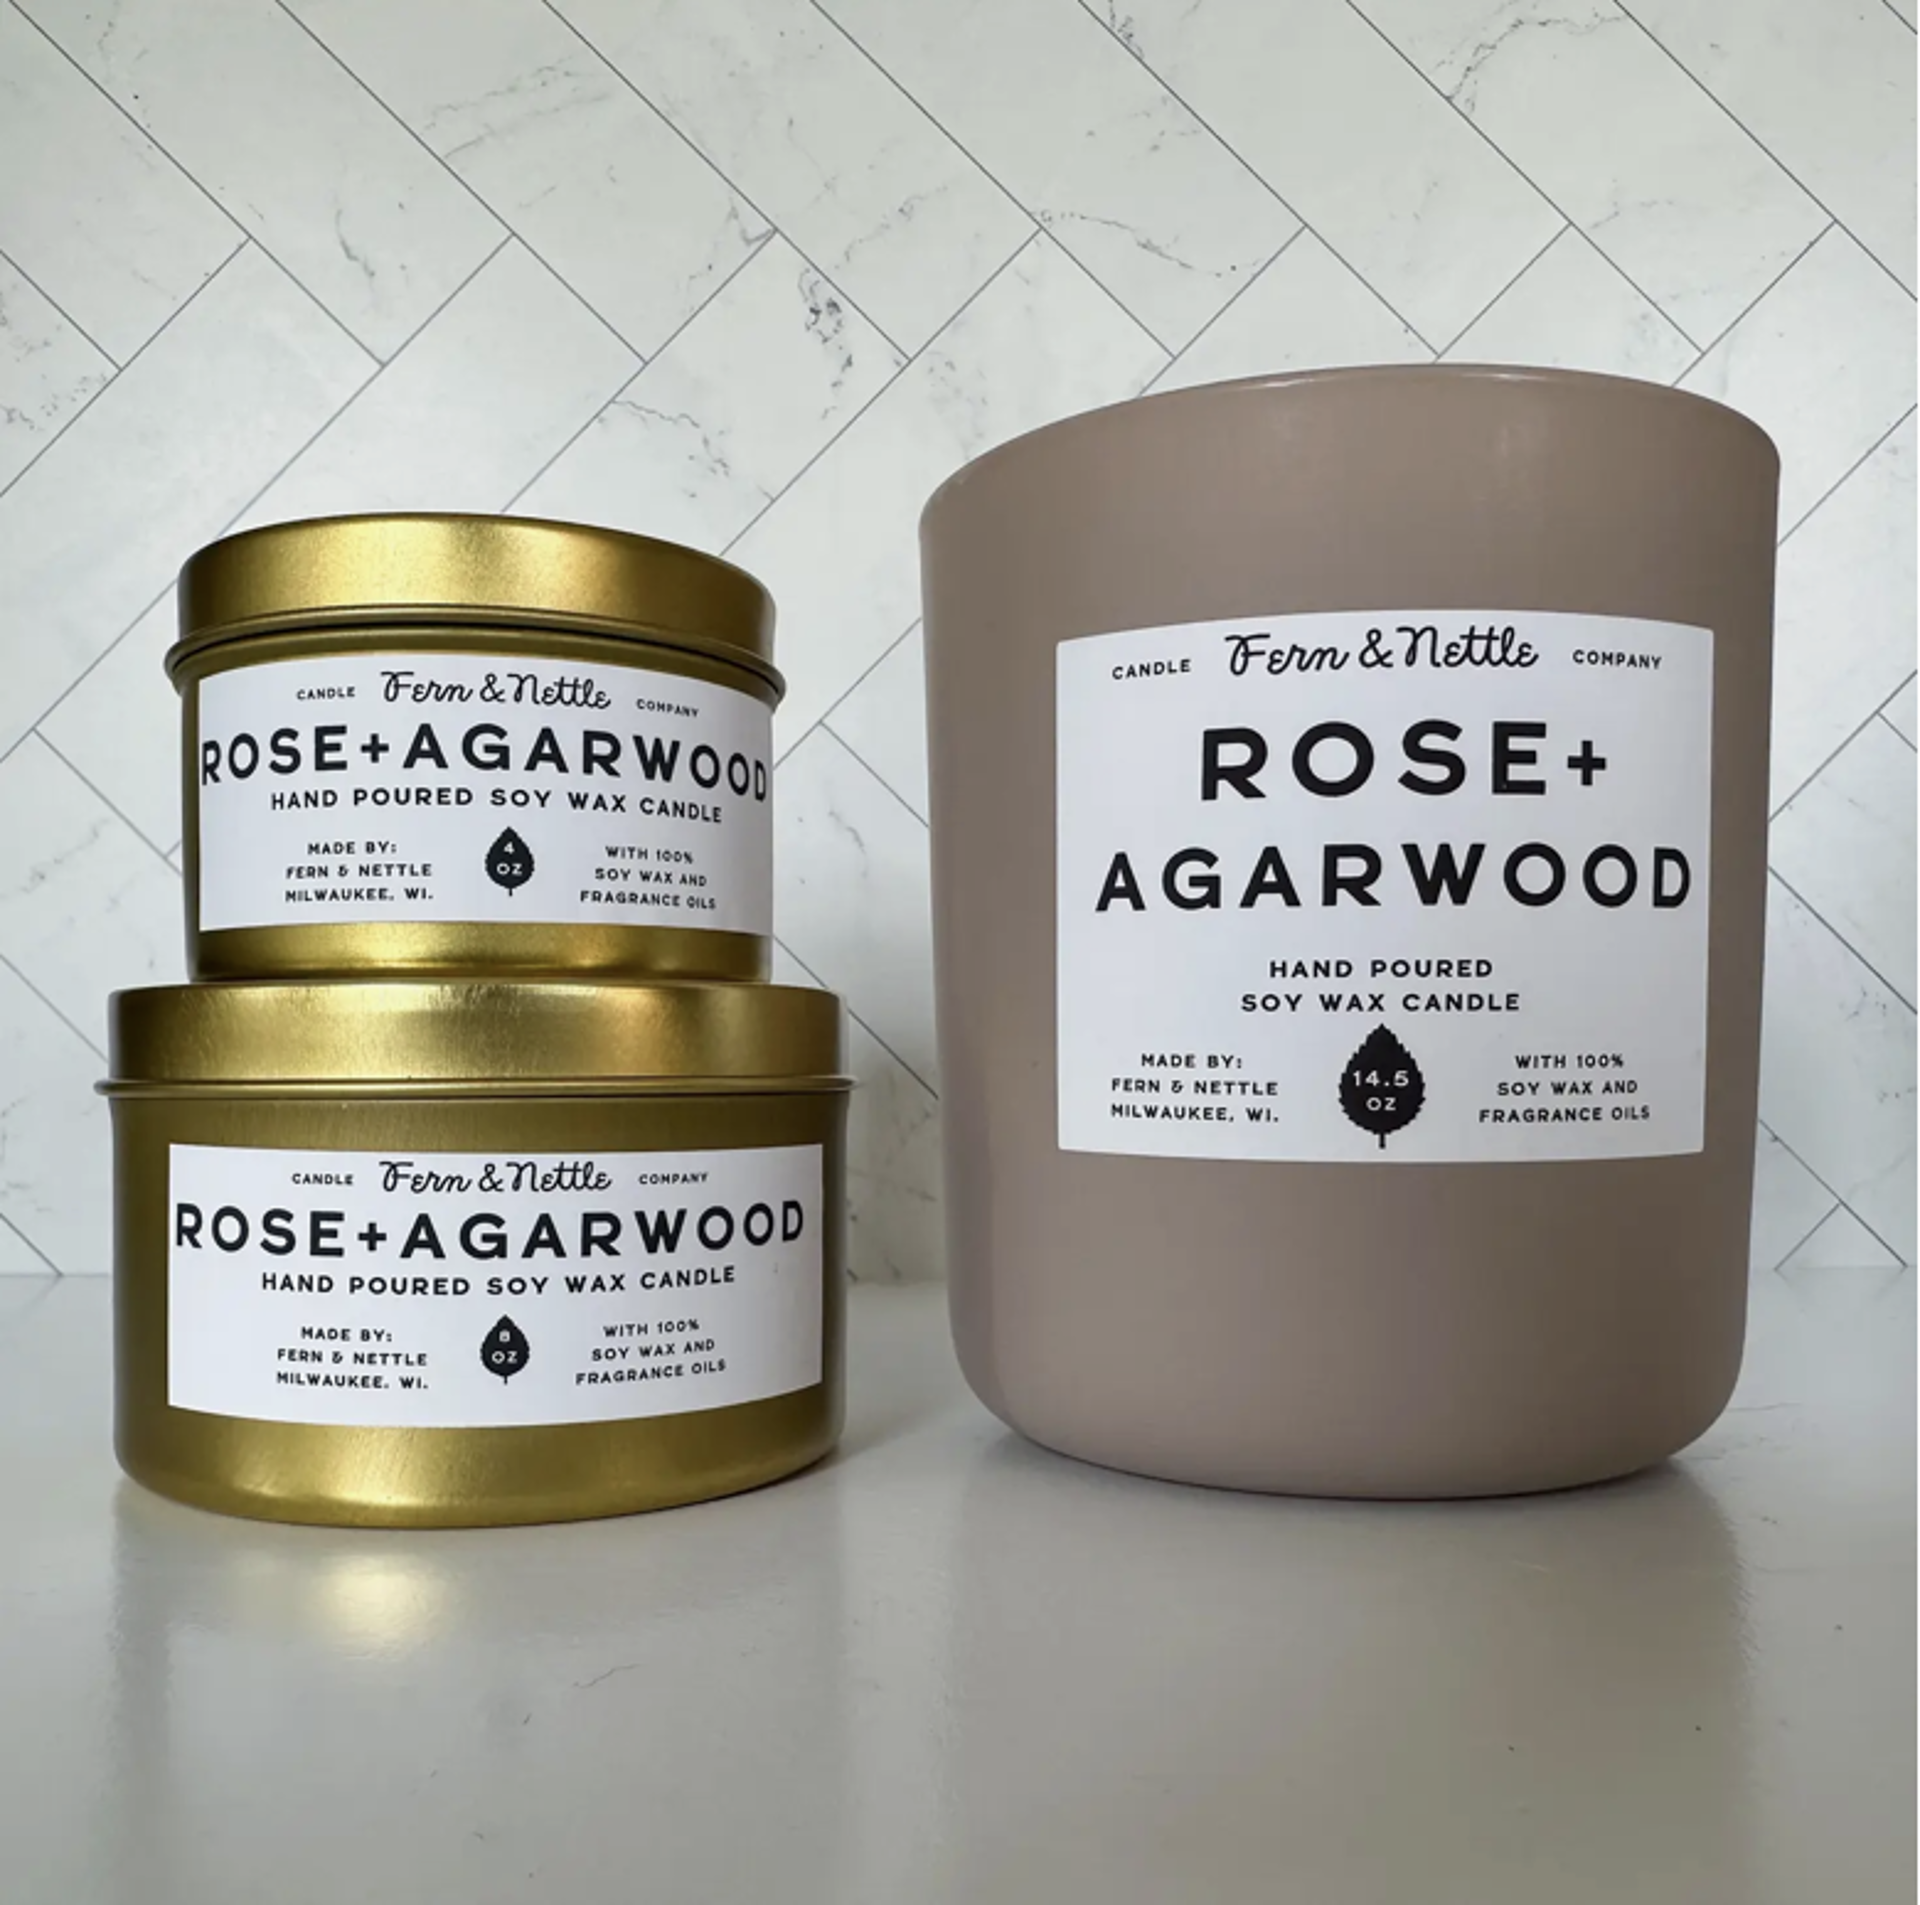 8 oz. Rose+Agarwood Soy Wax Candle by Fern & Nettle